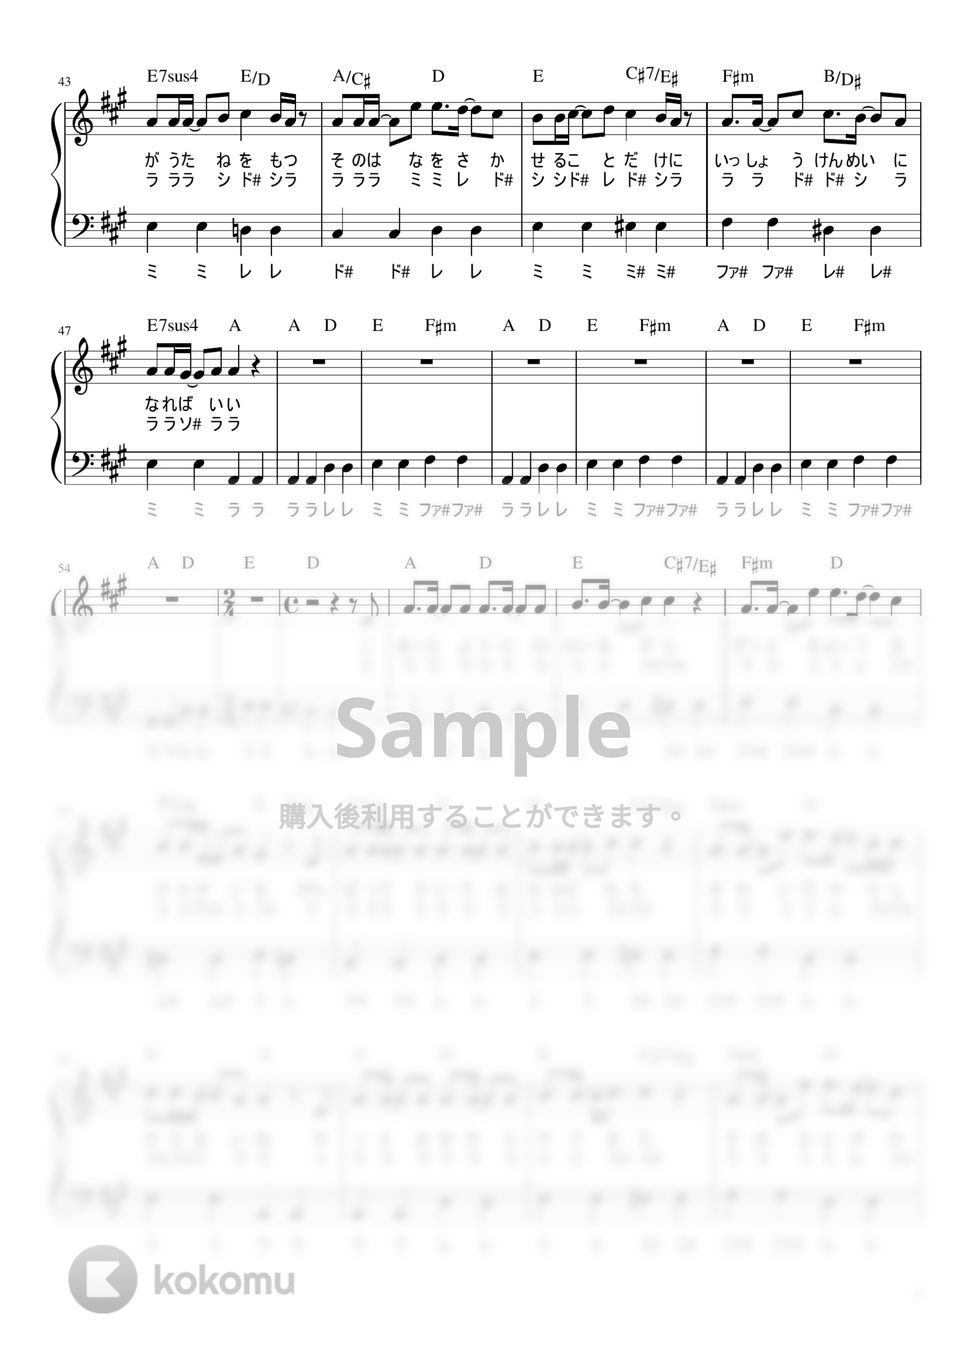 SMAP - 世界に一つだけの花 (かんたん / 歌詞付き / ドレミ付き / 初心者) 楽譜 by piano.tokyo